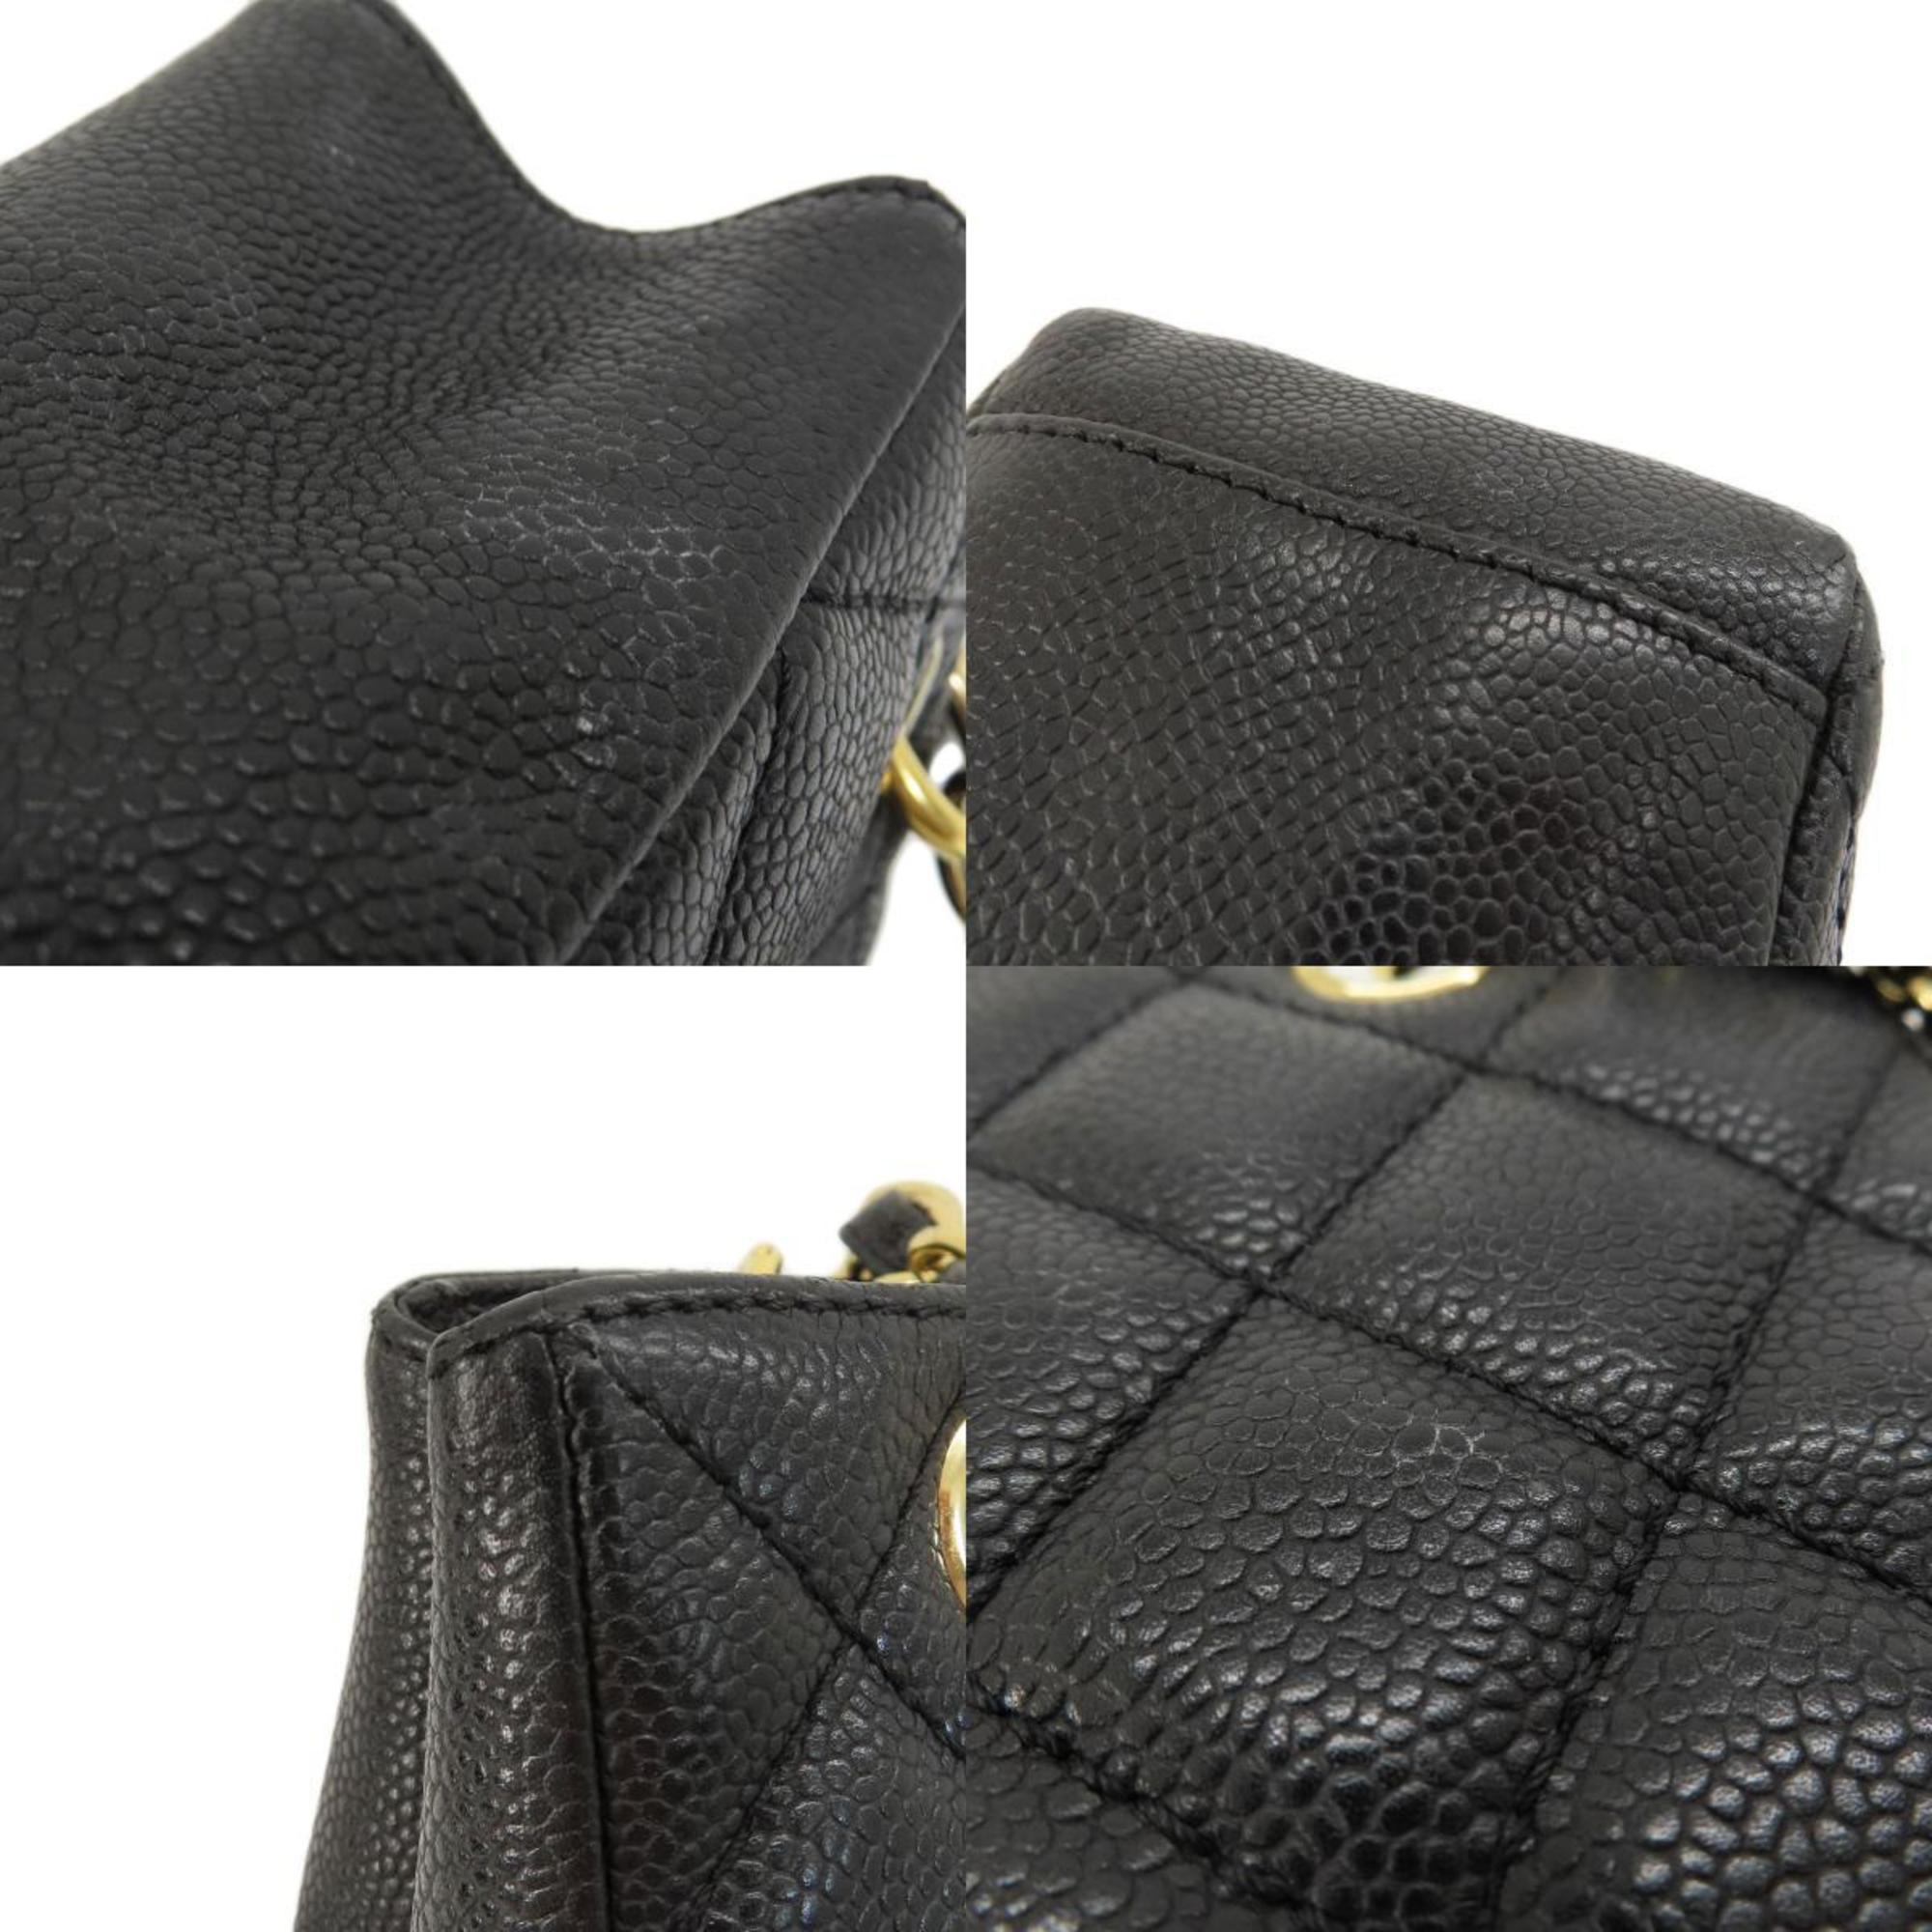 Chanel Chain Shoulder Matelasse Handbag Caviar Skin Women's